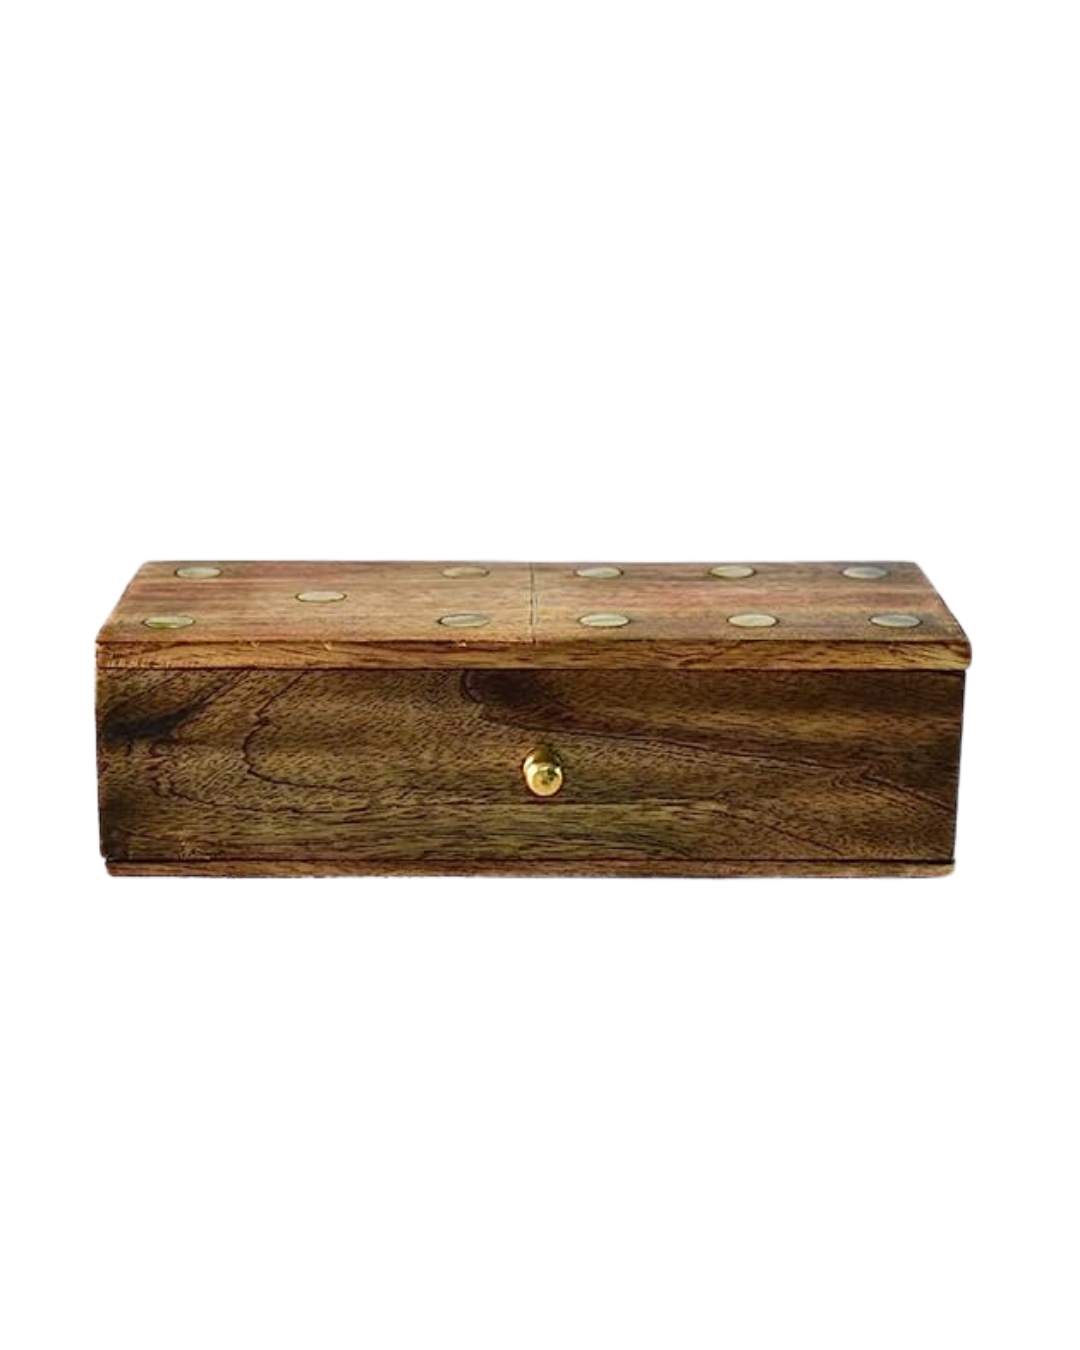 Mango Wood & Brass Domino Box